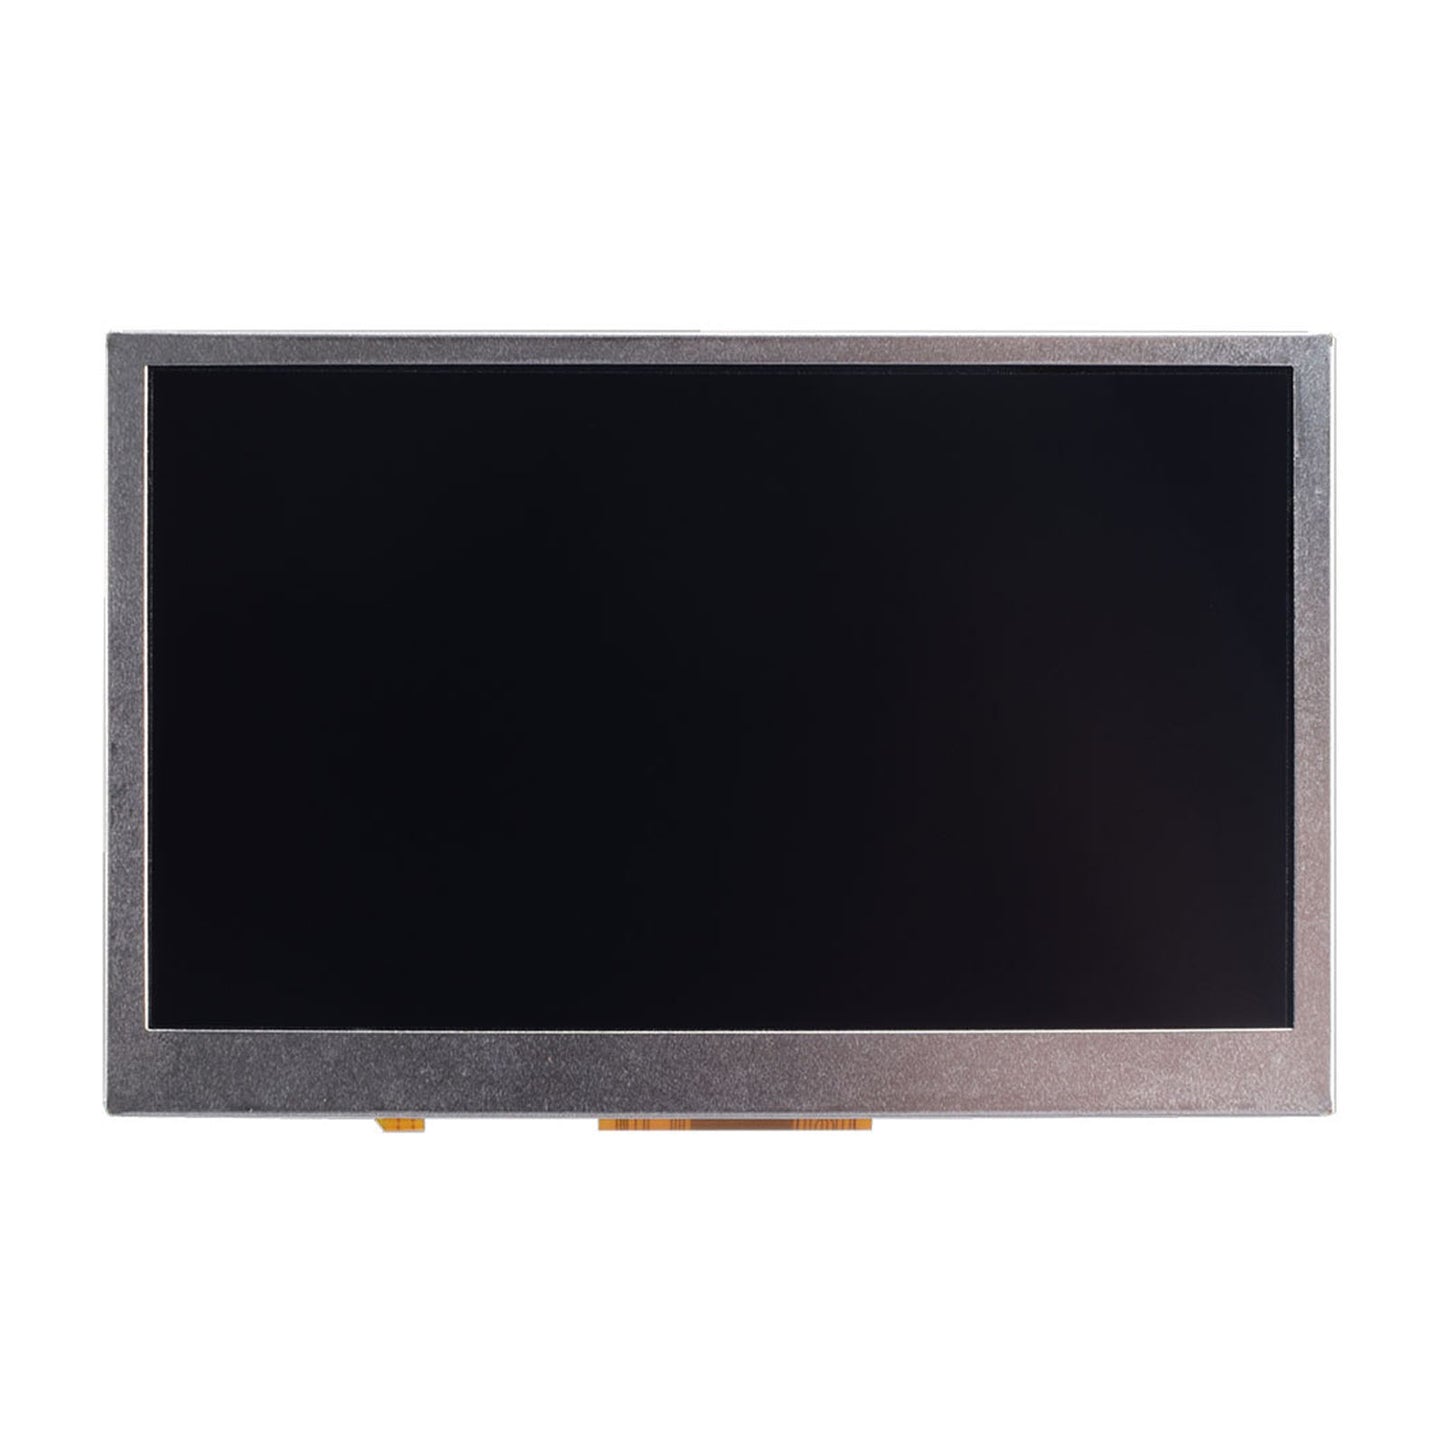 DisplayModule 4.3" IPS 480X272 High Brightness TFT Display Panel –RGB